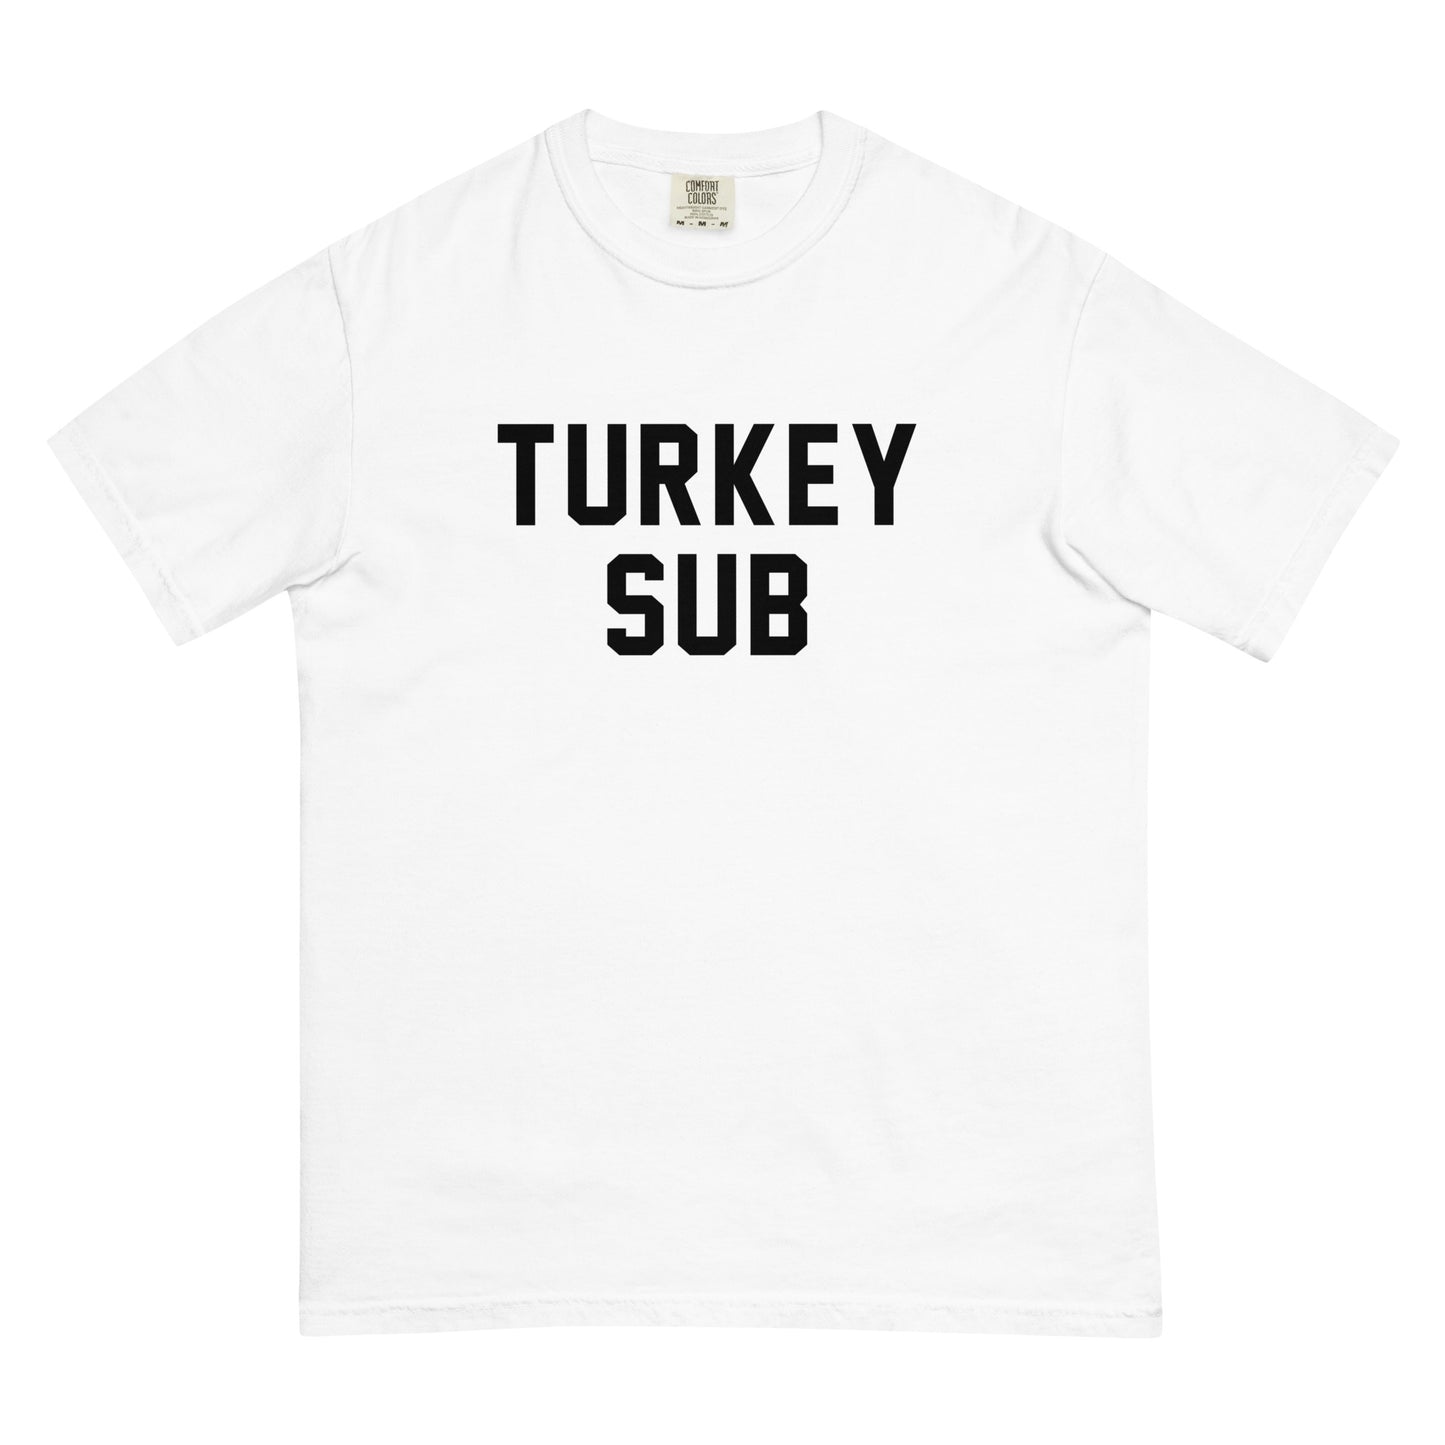 TURKEY SUB